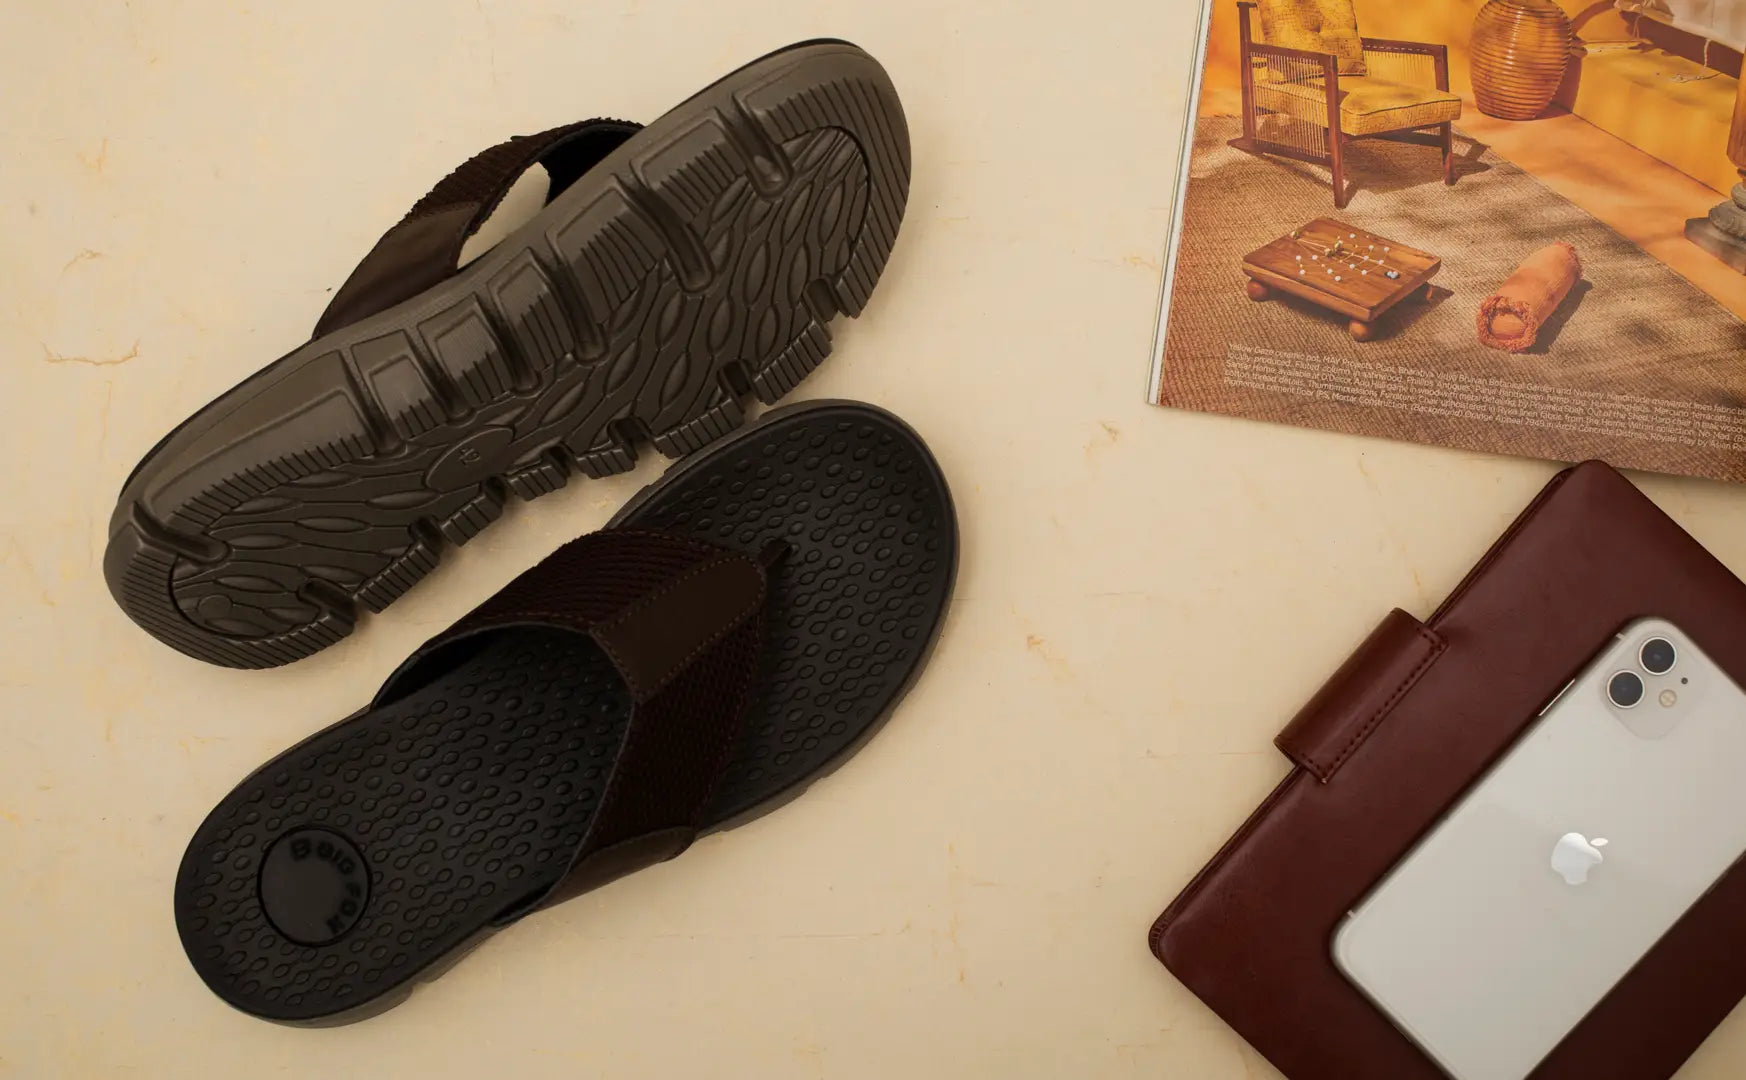 Sandals for Men: Buy Premium Sandals for Men in India - The Economic Times